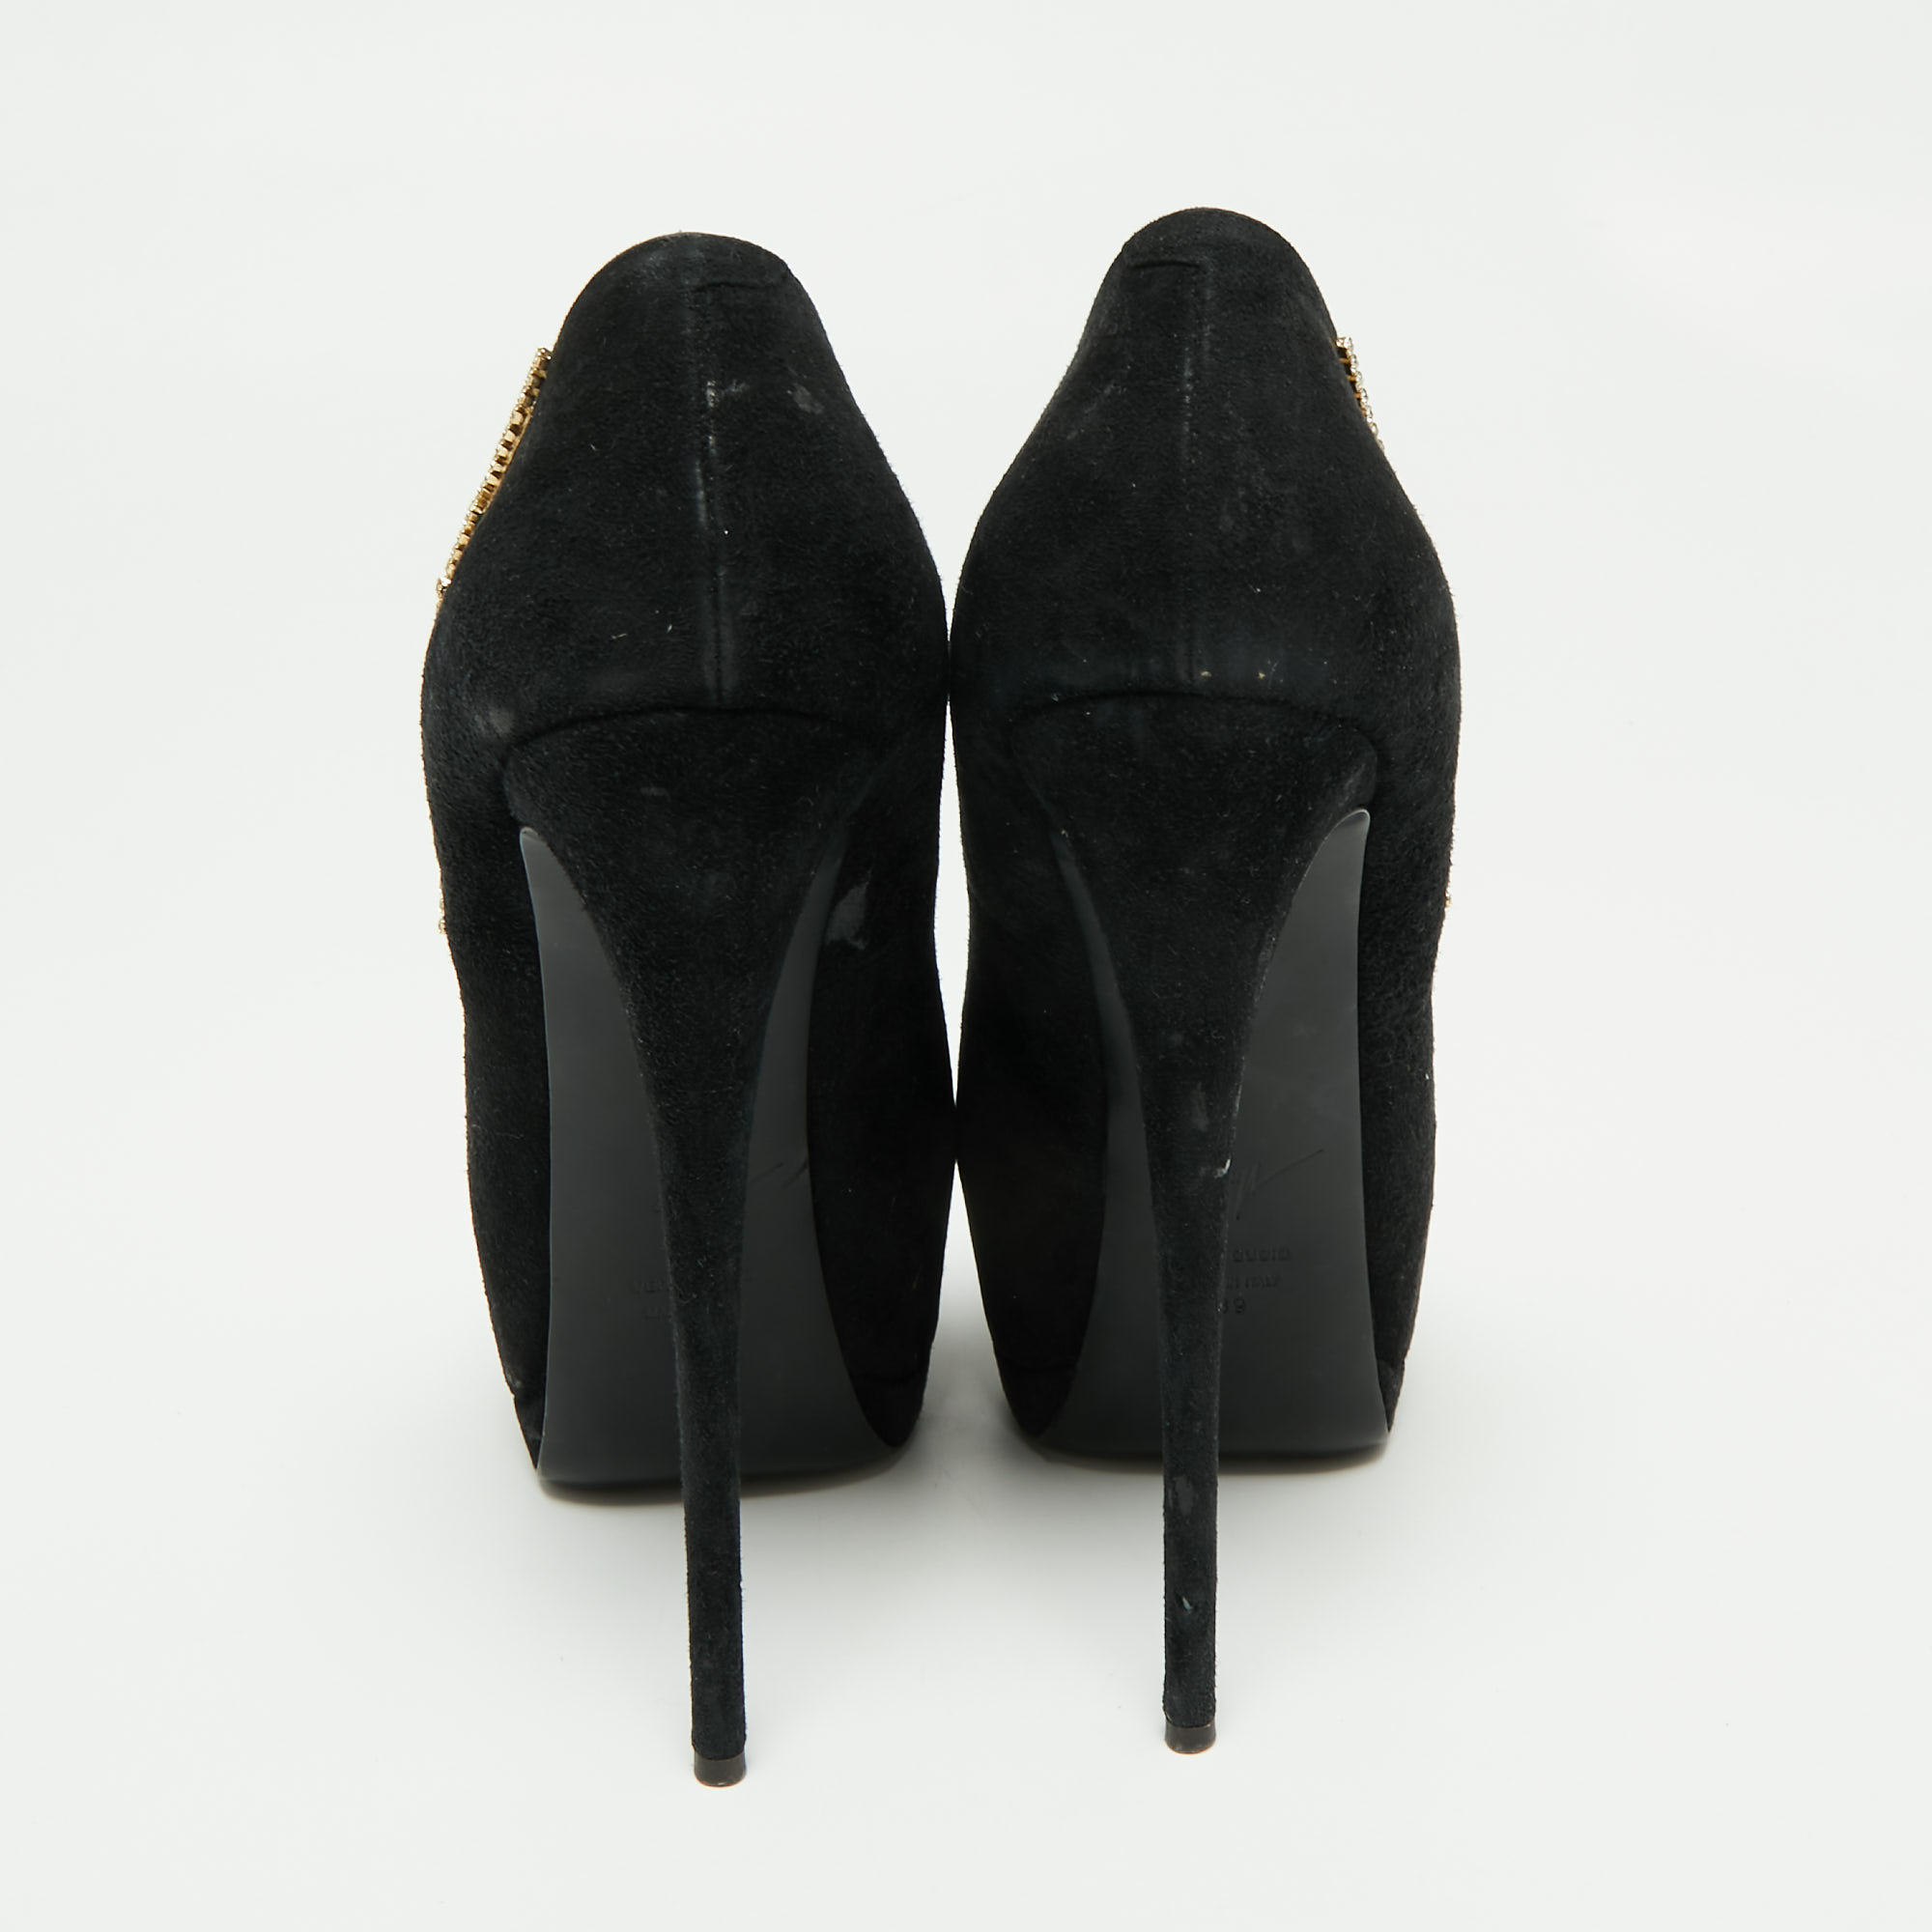 Giuseppe Zanotti Black Suede Crystal Embellished Peep Toe Pumps Size 39